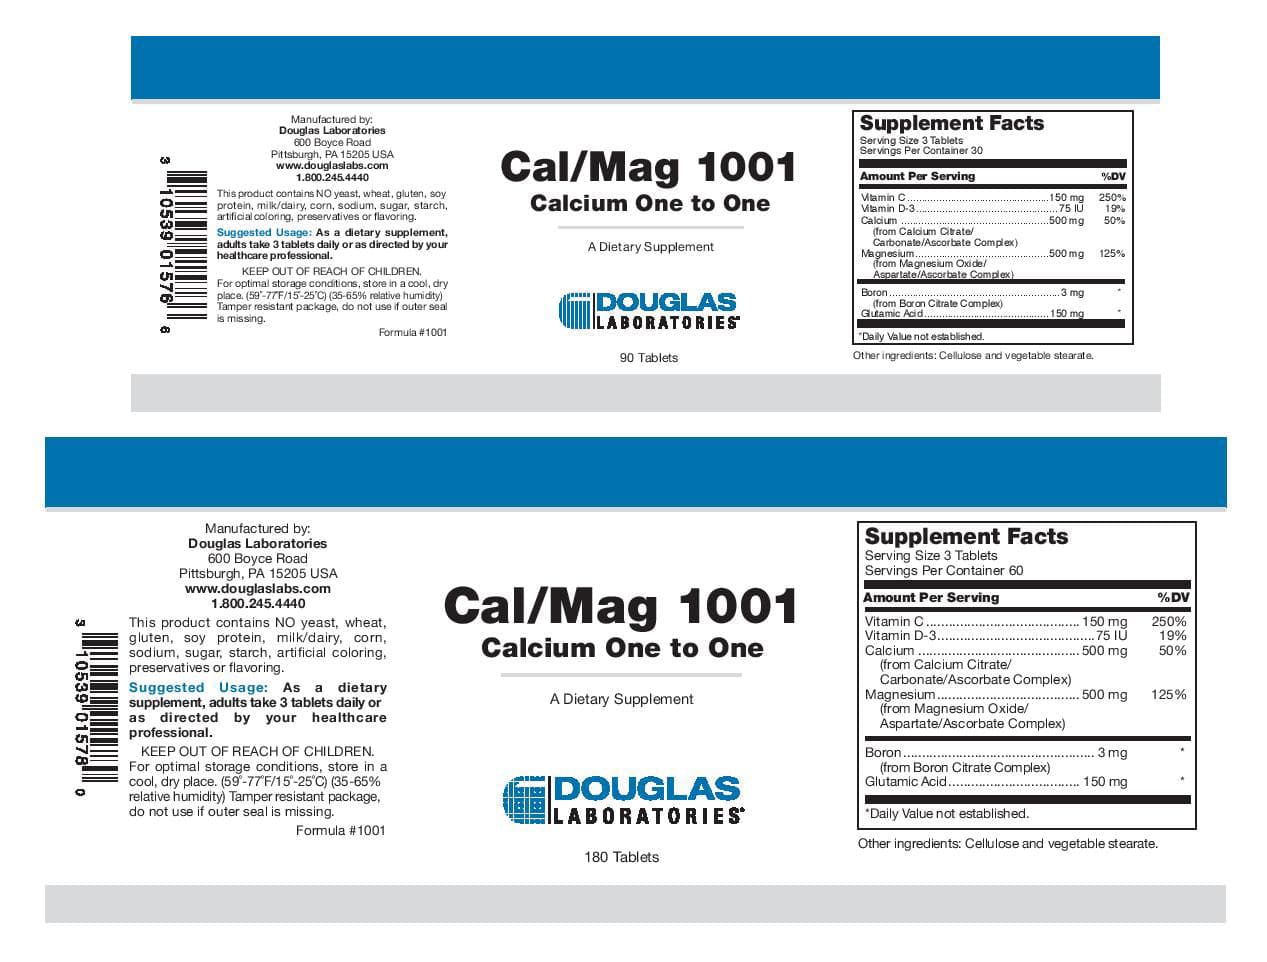 Douglas Laboratories Cal/Mag 1001